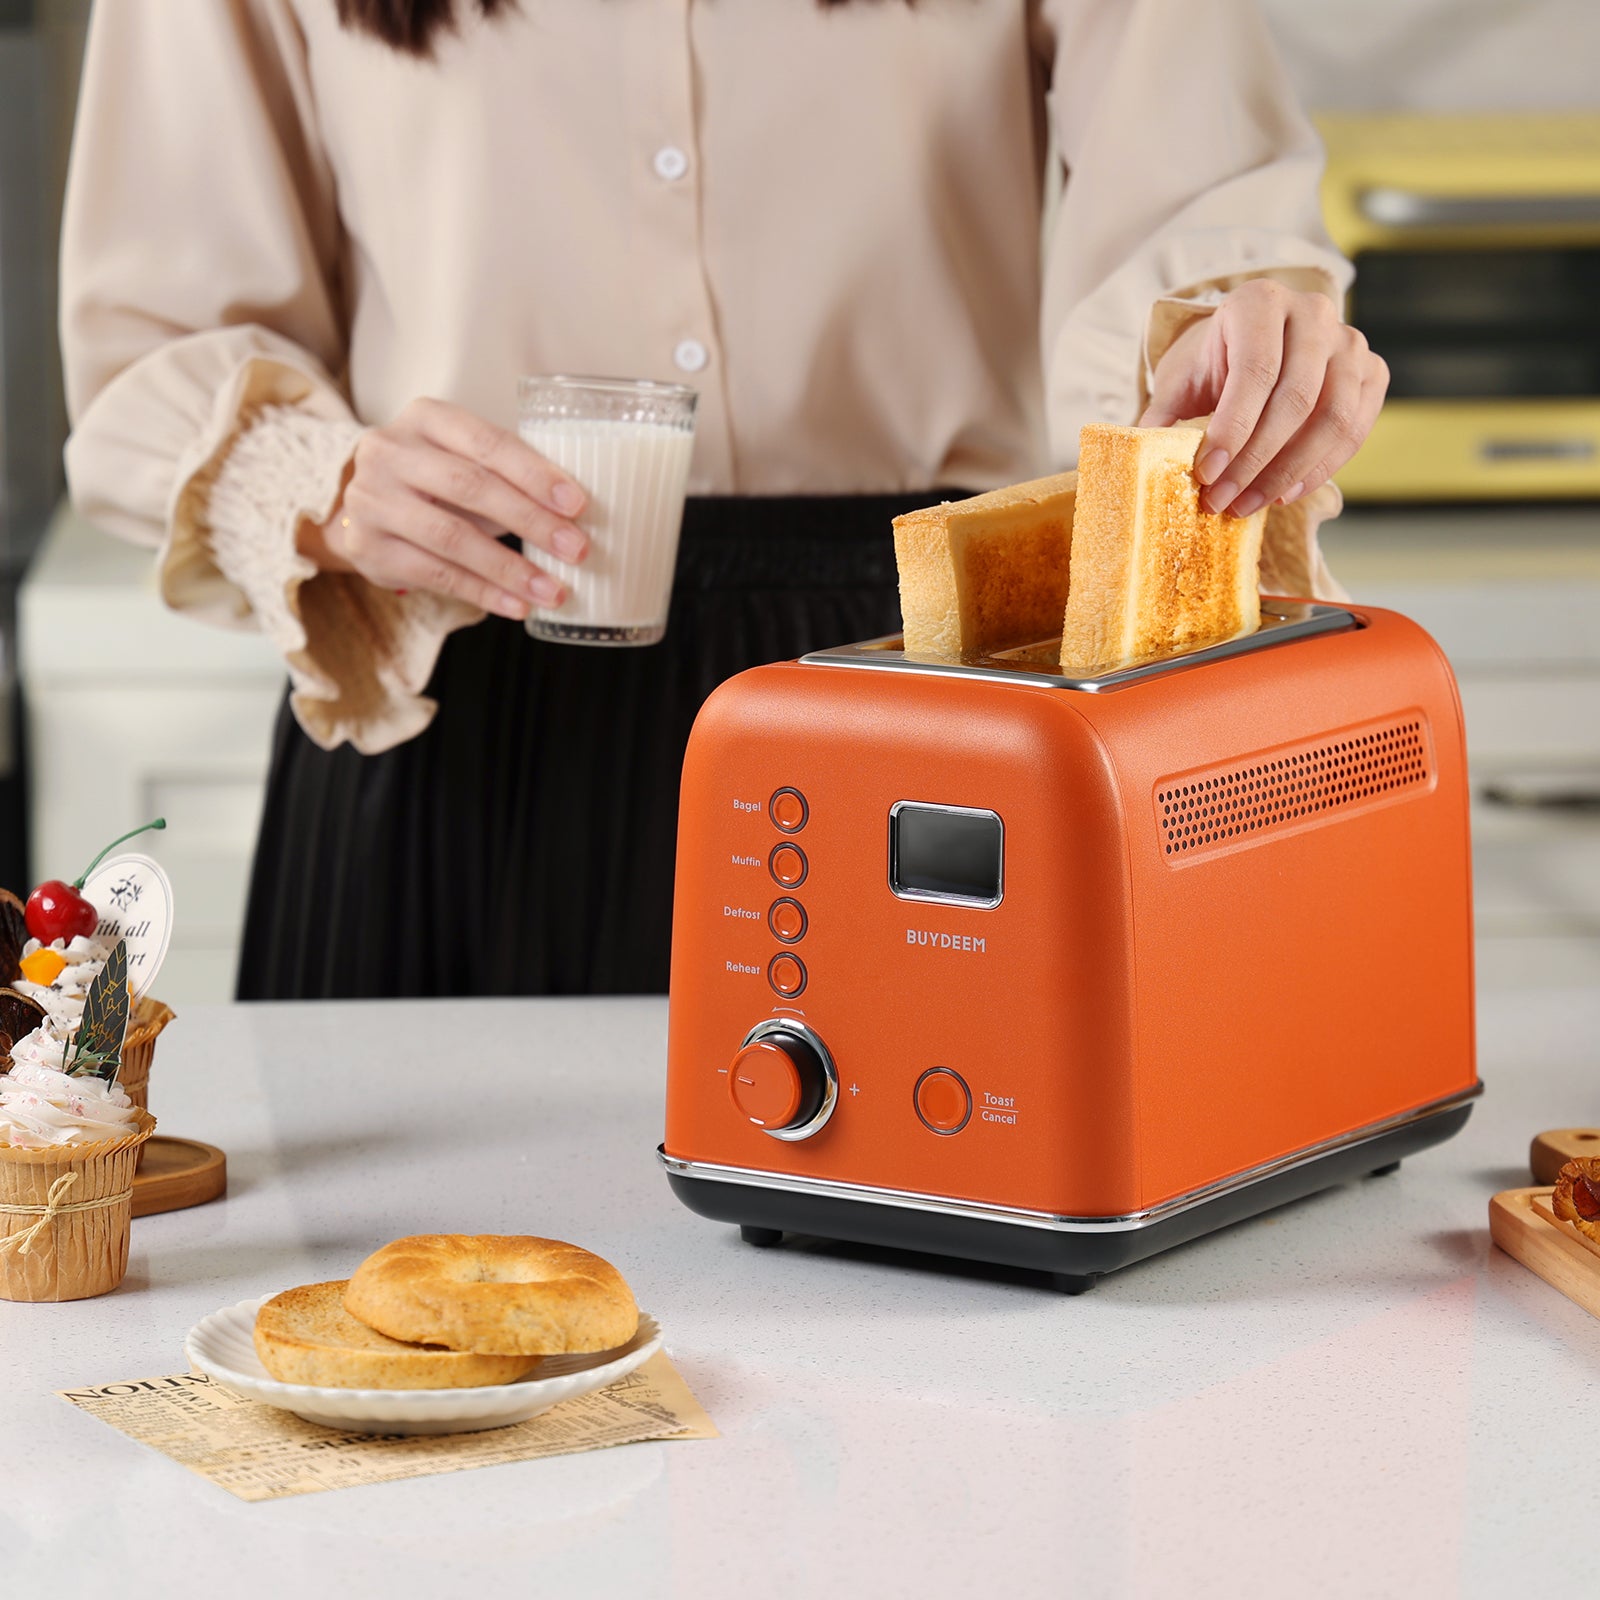 Automatic Digital 2-slice Toaster & Ceramic Mug 350ml - Koi Red Bundle Offer